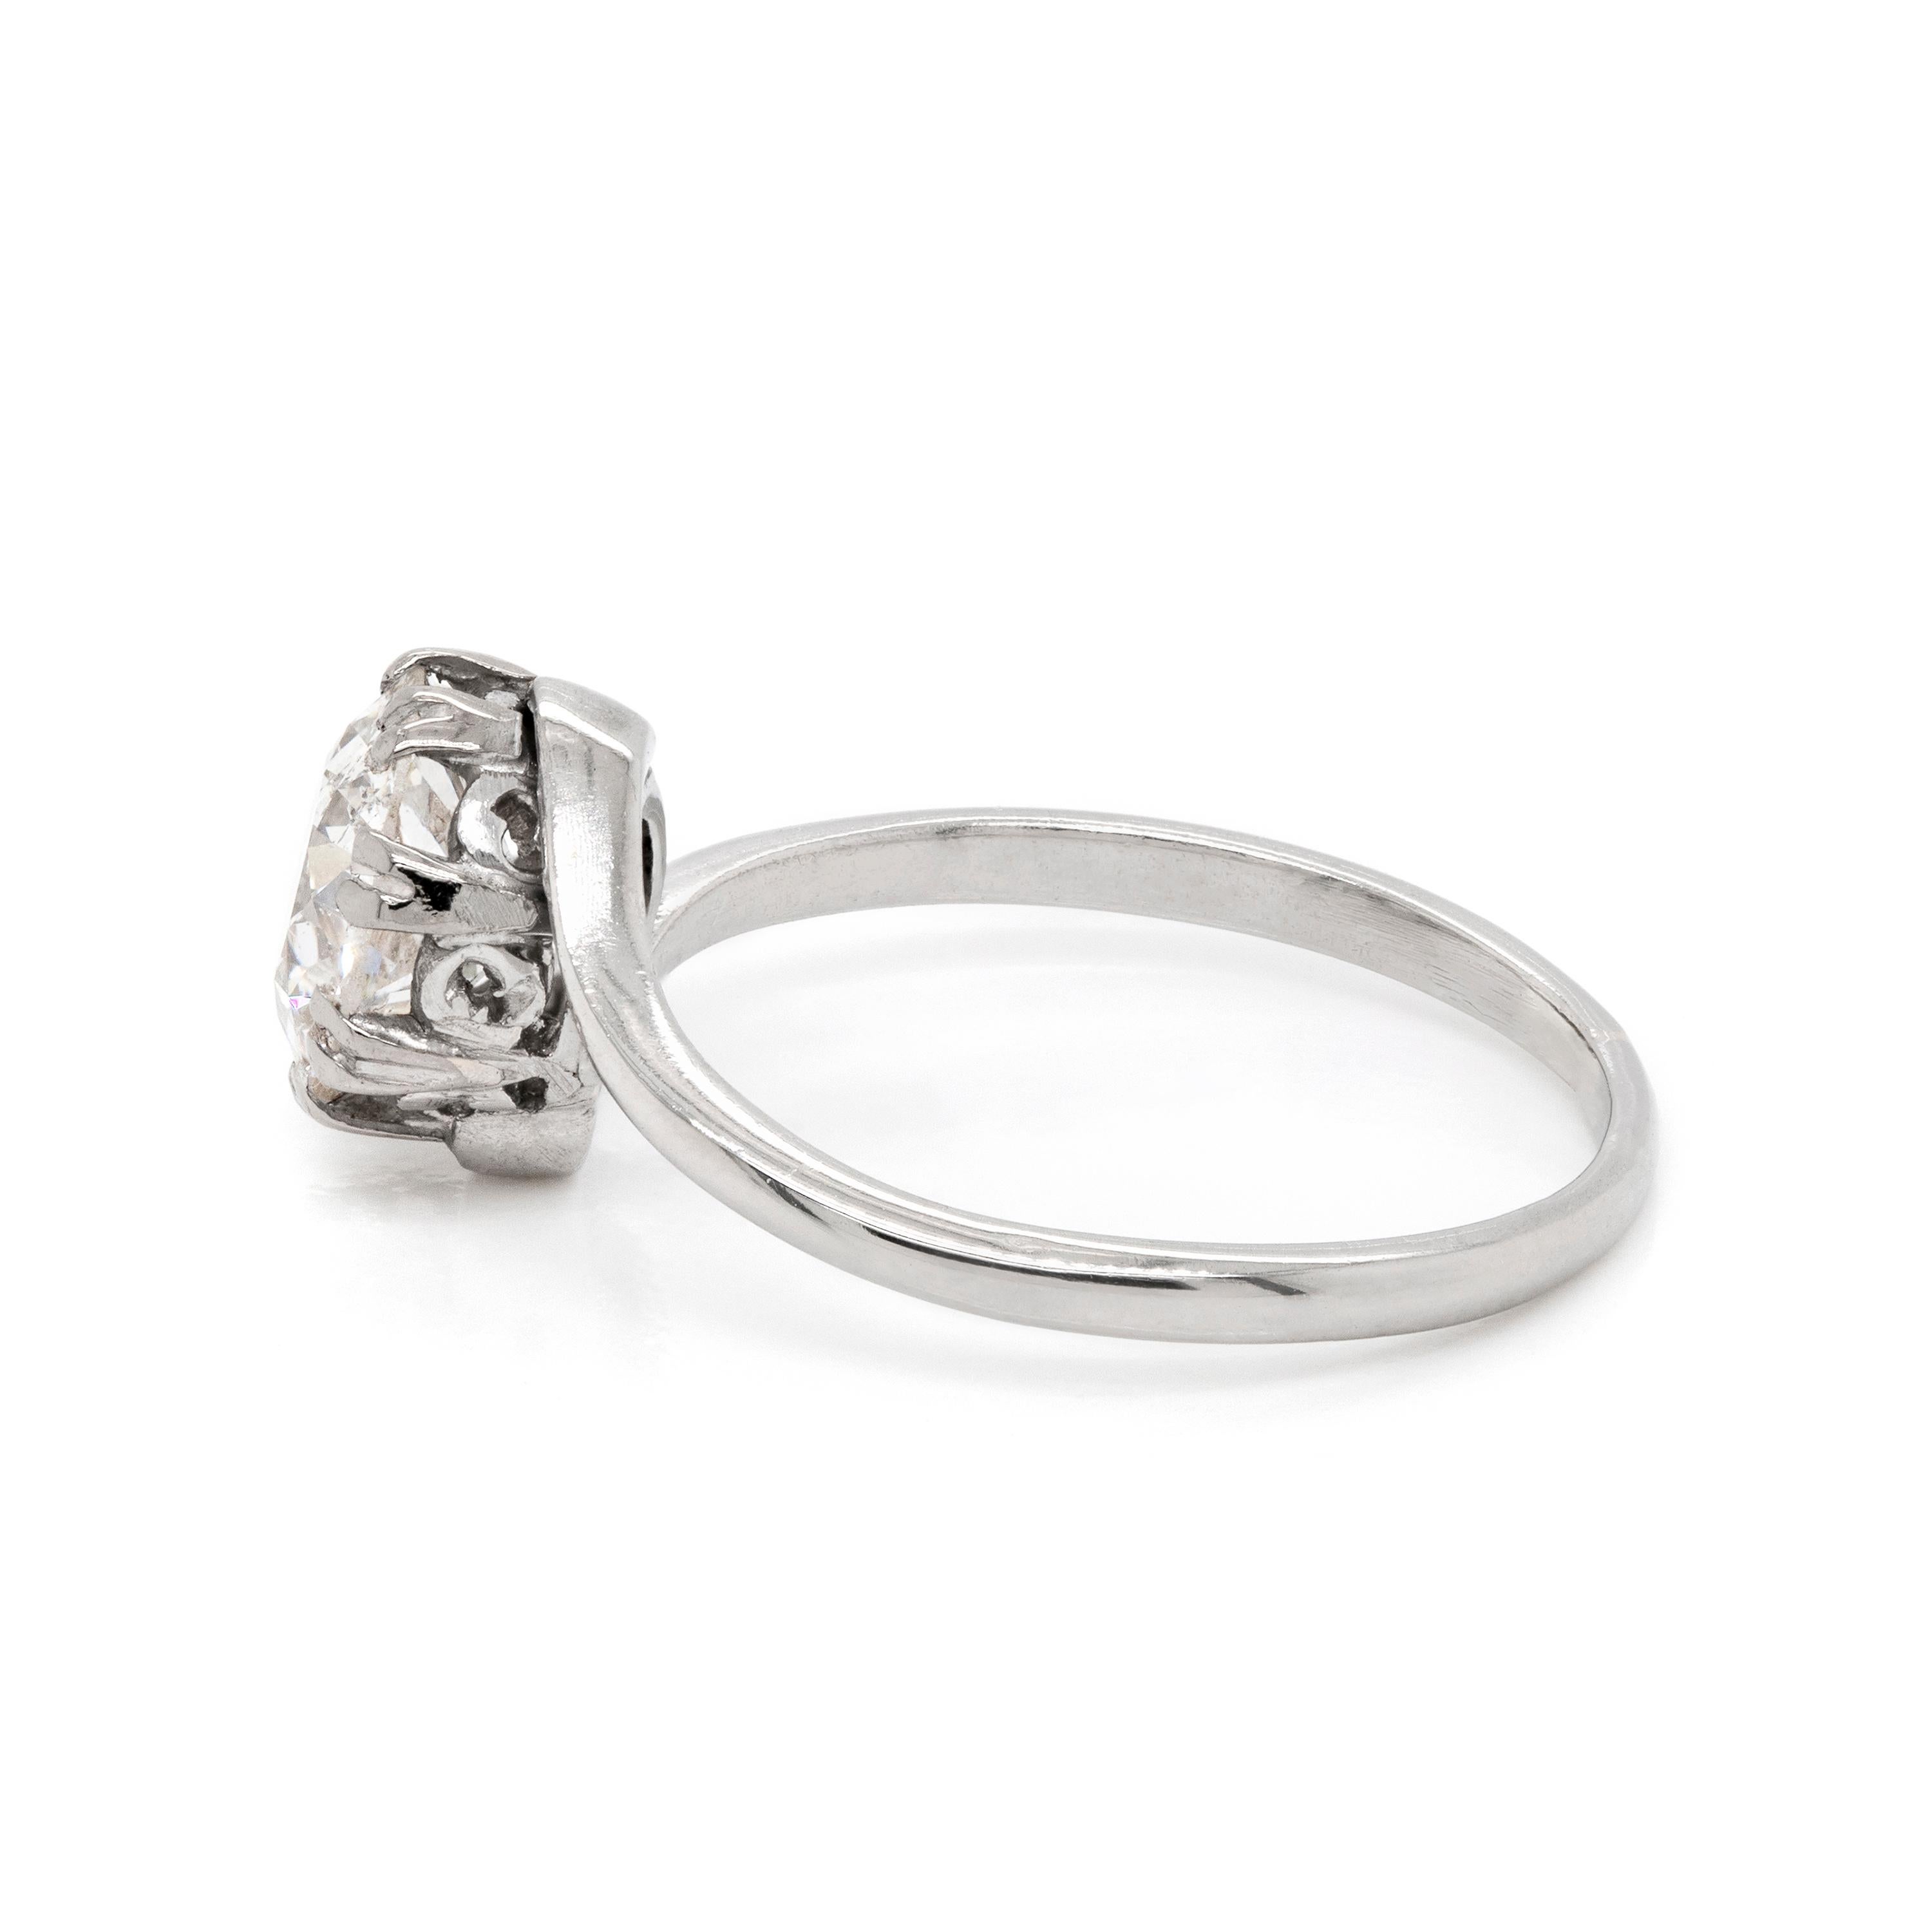 Edwardian Antique 1.45 Carat Old Cut Diamond Platinum Twist Engagement Ring, circa 1920s